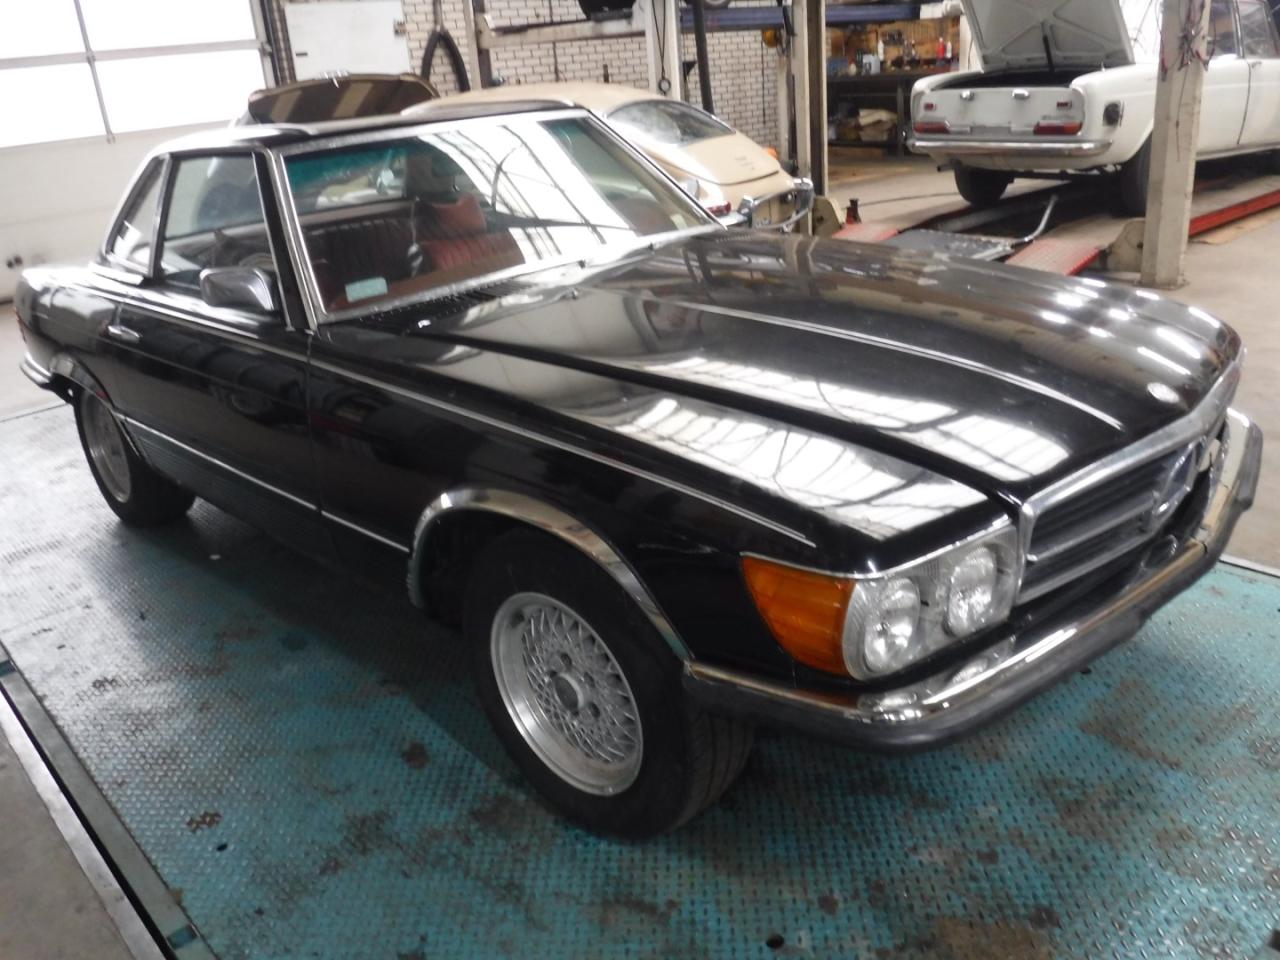 1973 Mercedes - Benz 450SL W107  &#039;&#039;73 black